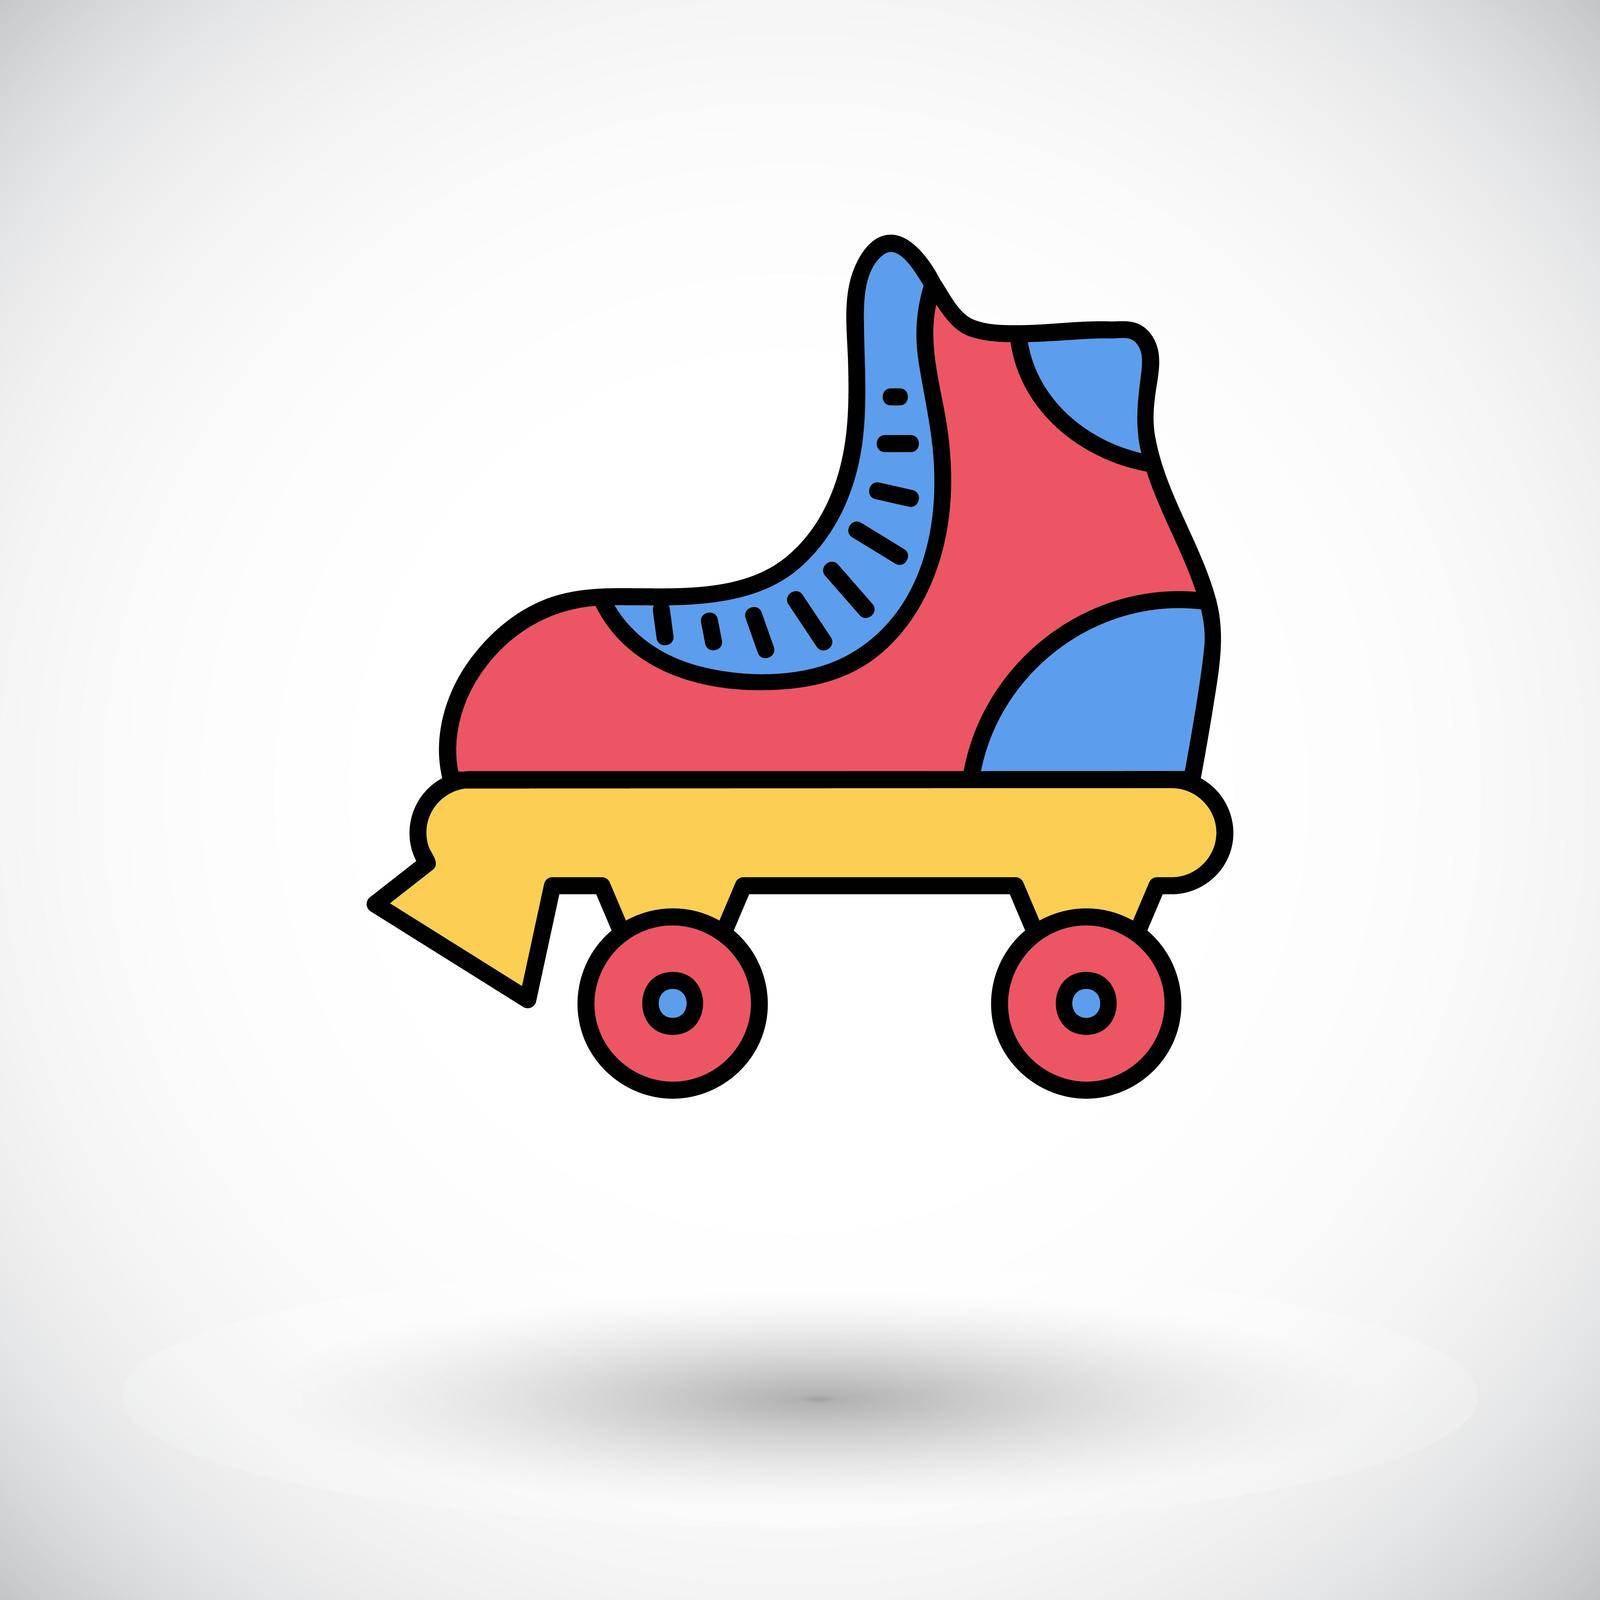 Roller skate by smoki